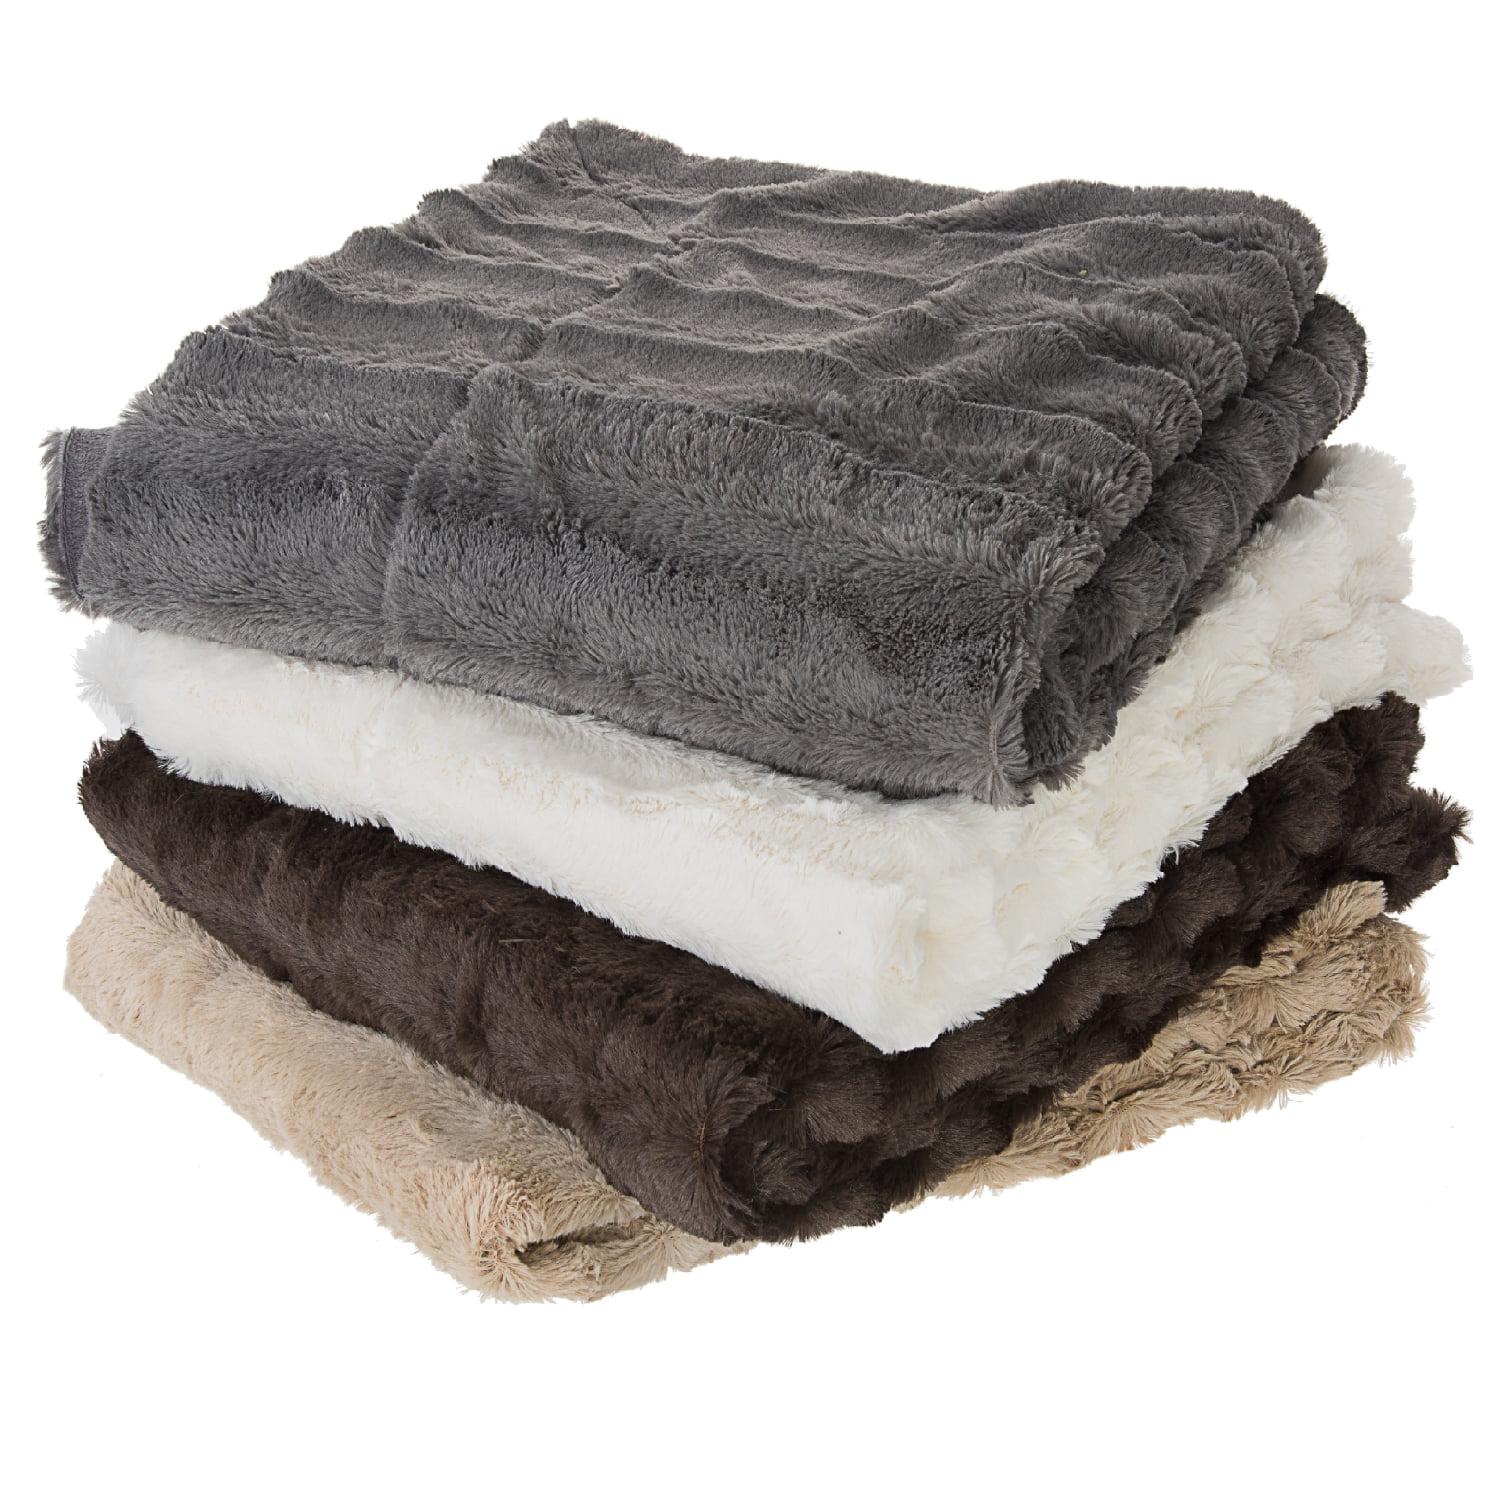 Details about     King Size Fleece Throw Blanket Sofa Soft Warm Faux Fur Mink Bedspread UK Fast